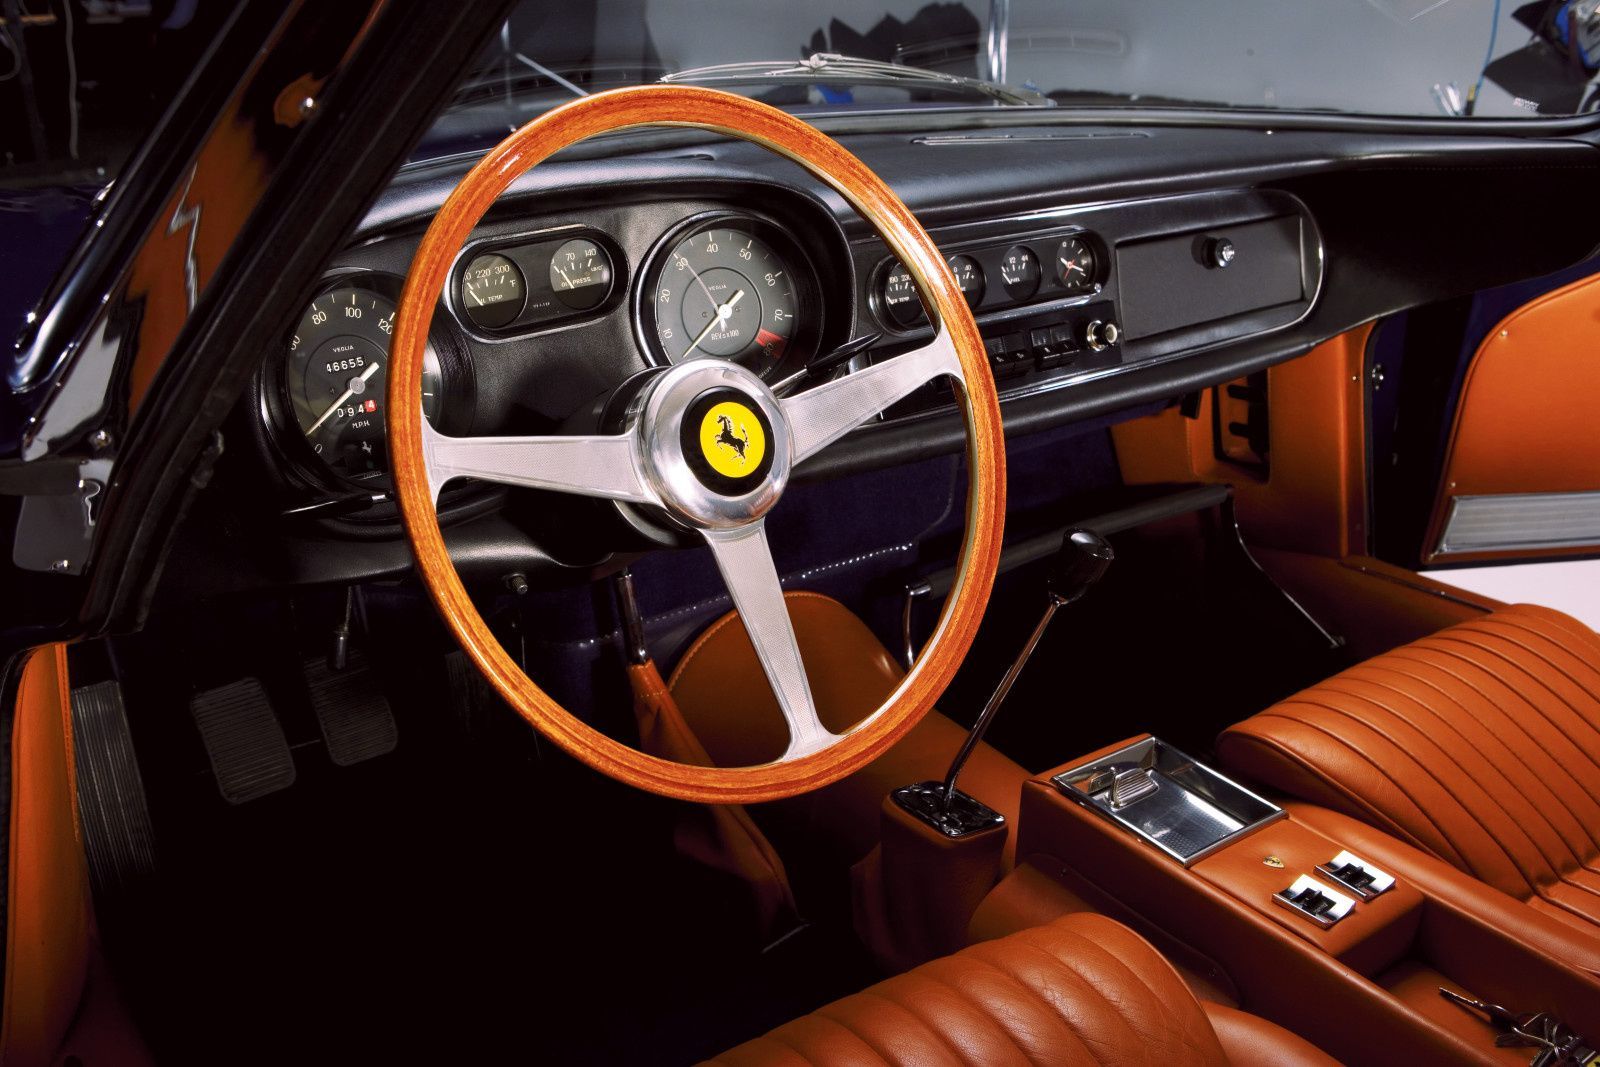 The interior of the 1967 Ferrari 275 GTB.